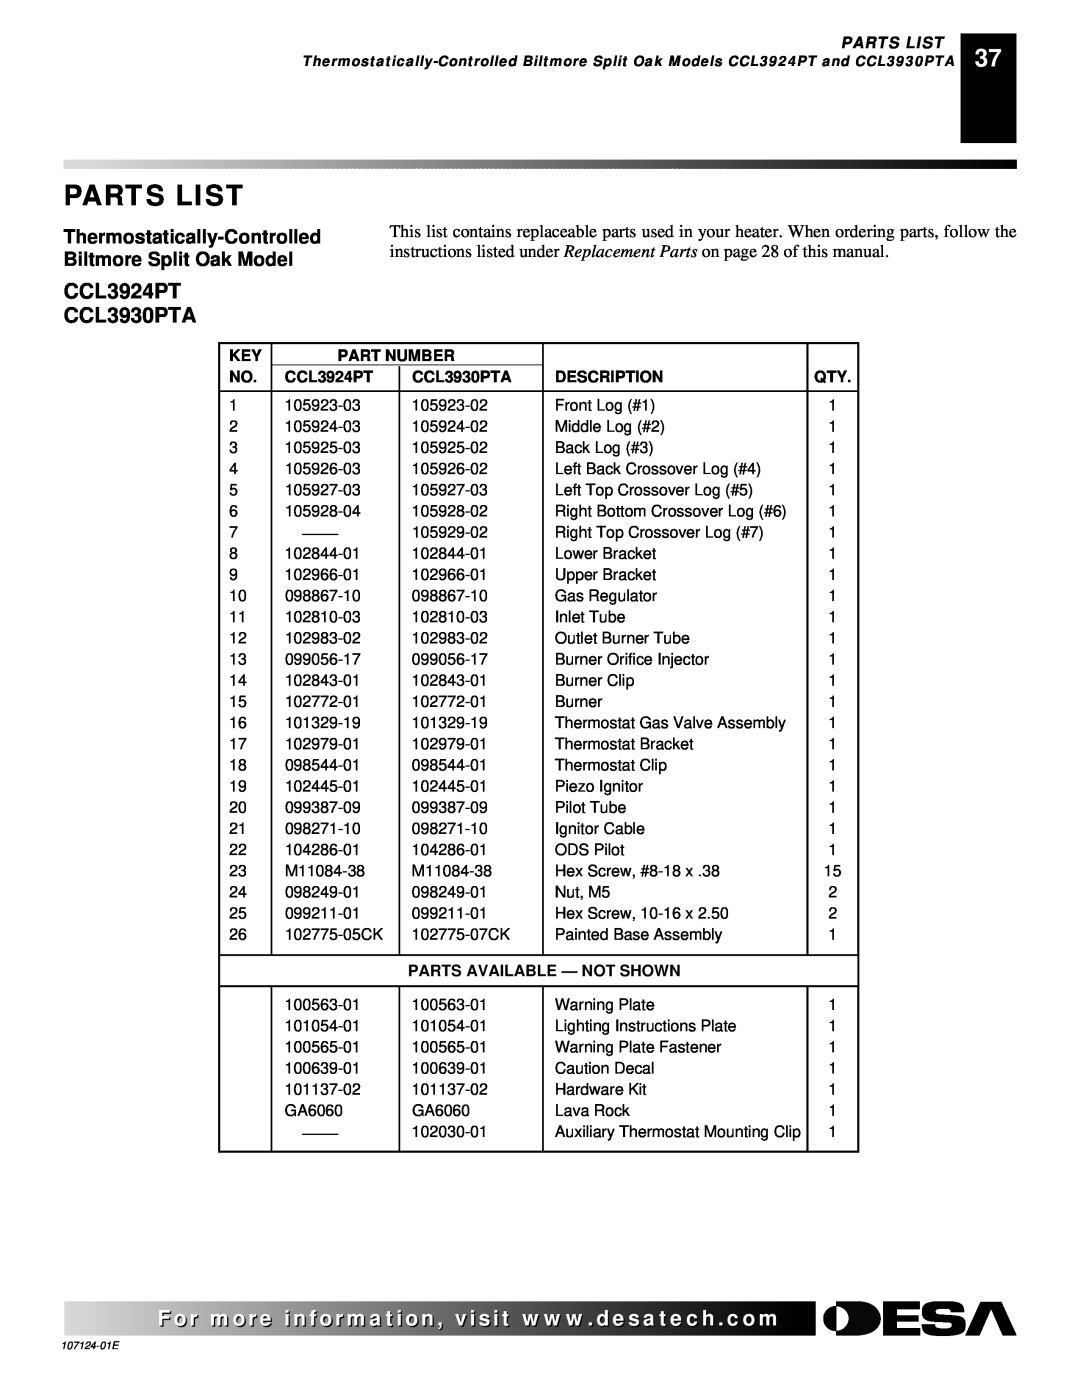 Desa CRL3124P Parts List, CCL3924PT CCL3930PTA, Thermostatically-Controlled, Biltmore Split Oak Model, Part Number 